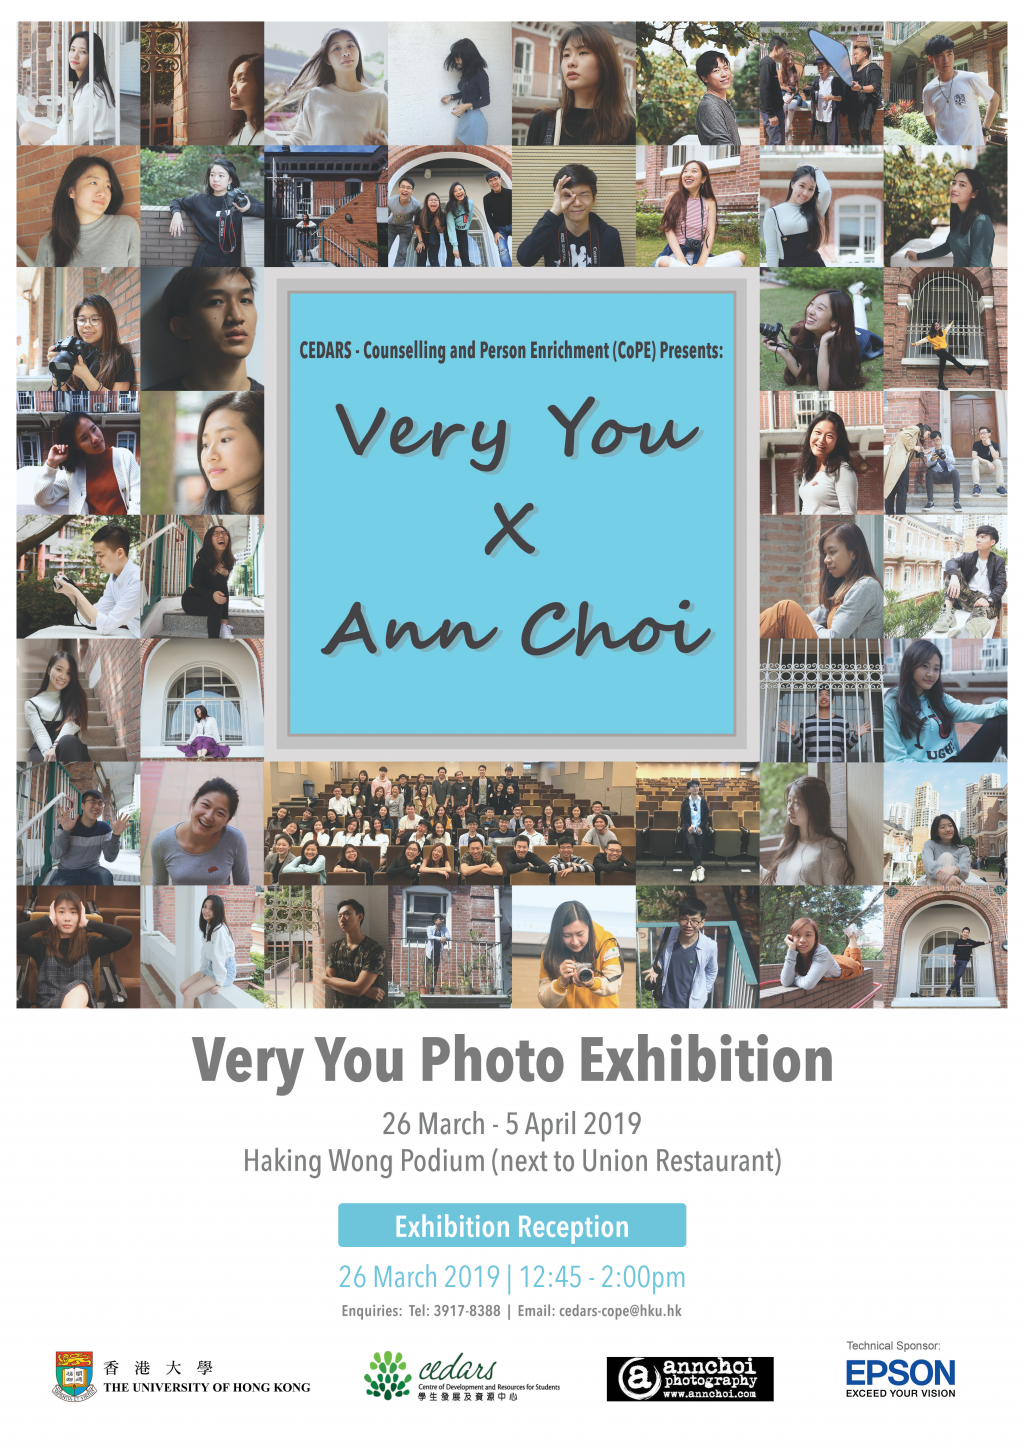 CEDARS-CoPE presents: Very You x Ann Choi Photo Exhibition